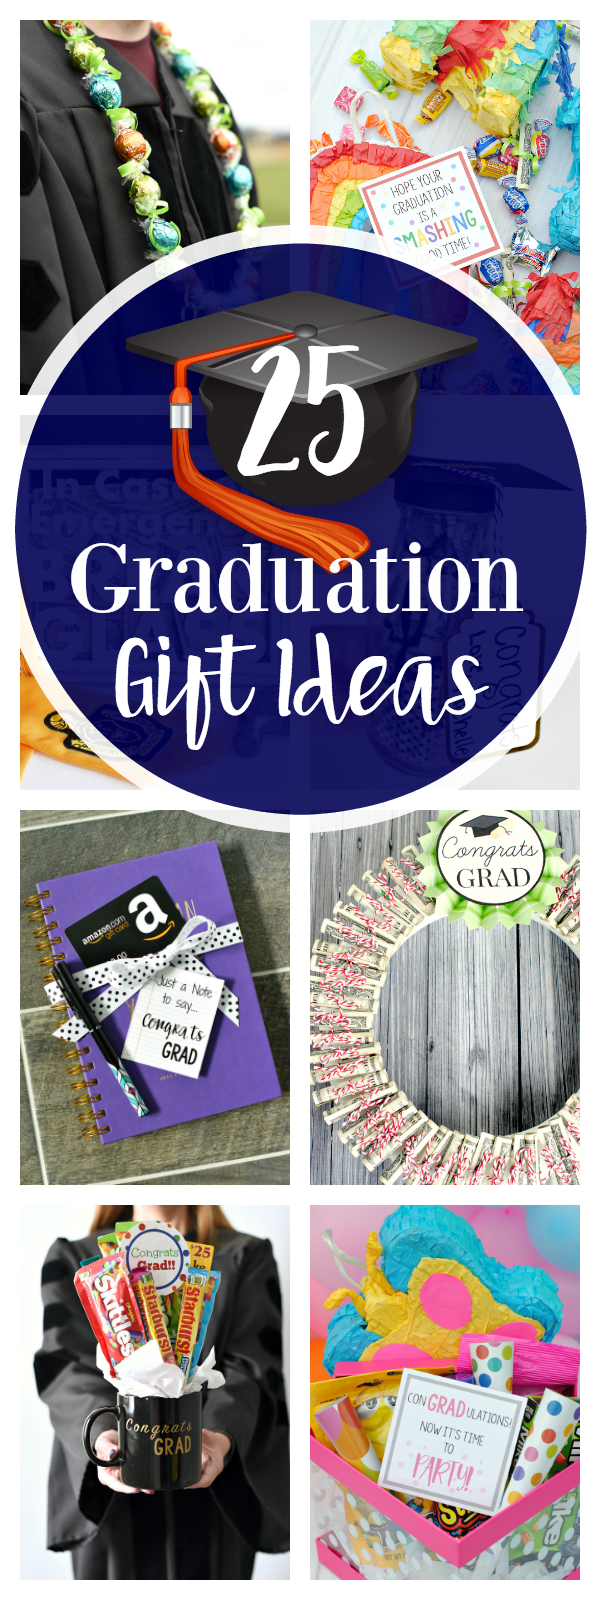 ideas for graduation gifts - Graduation Gift Ideas